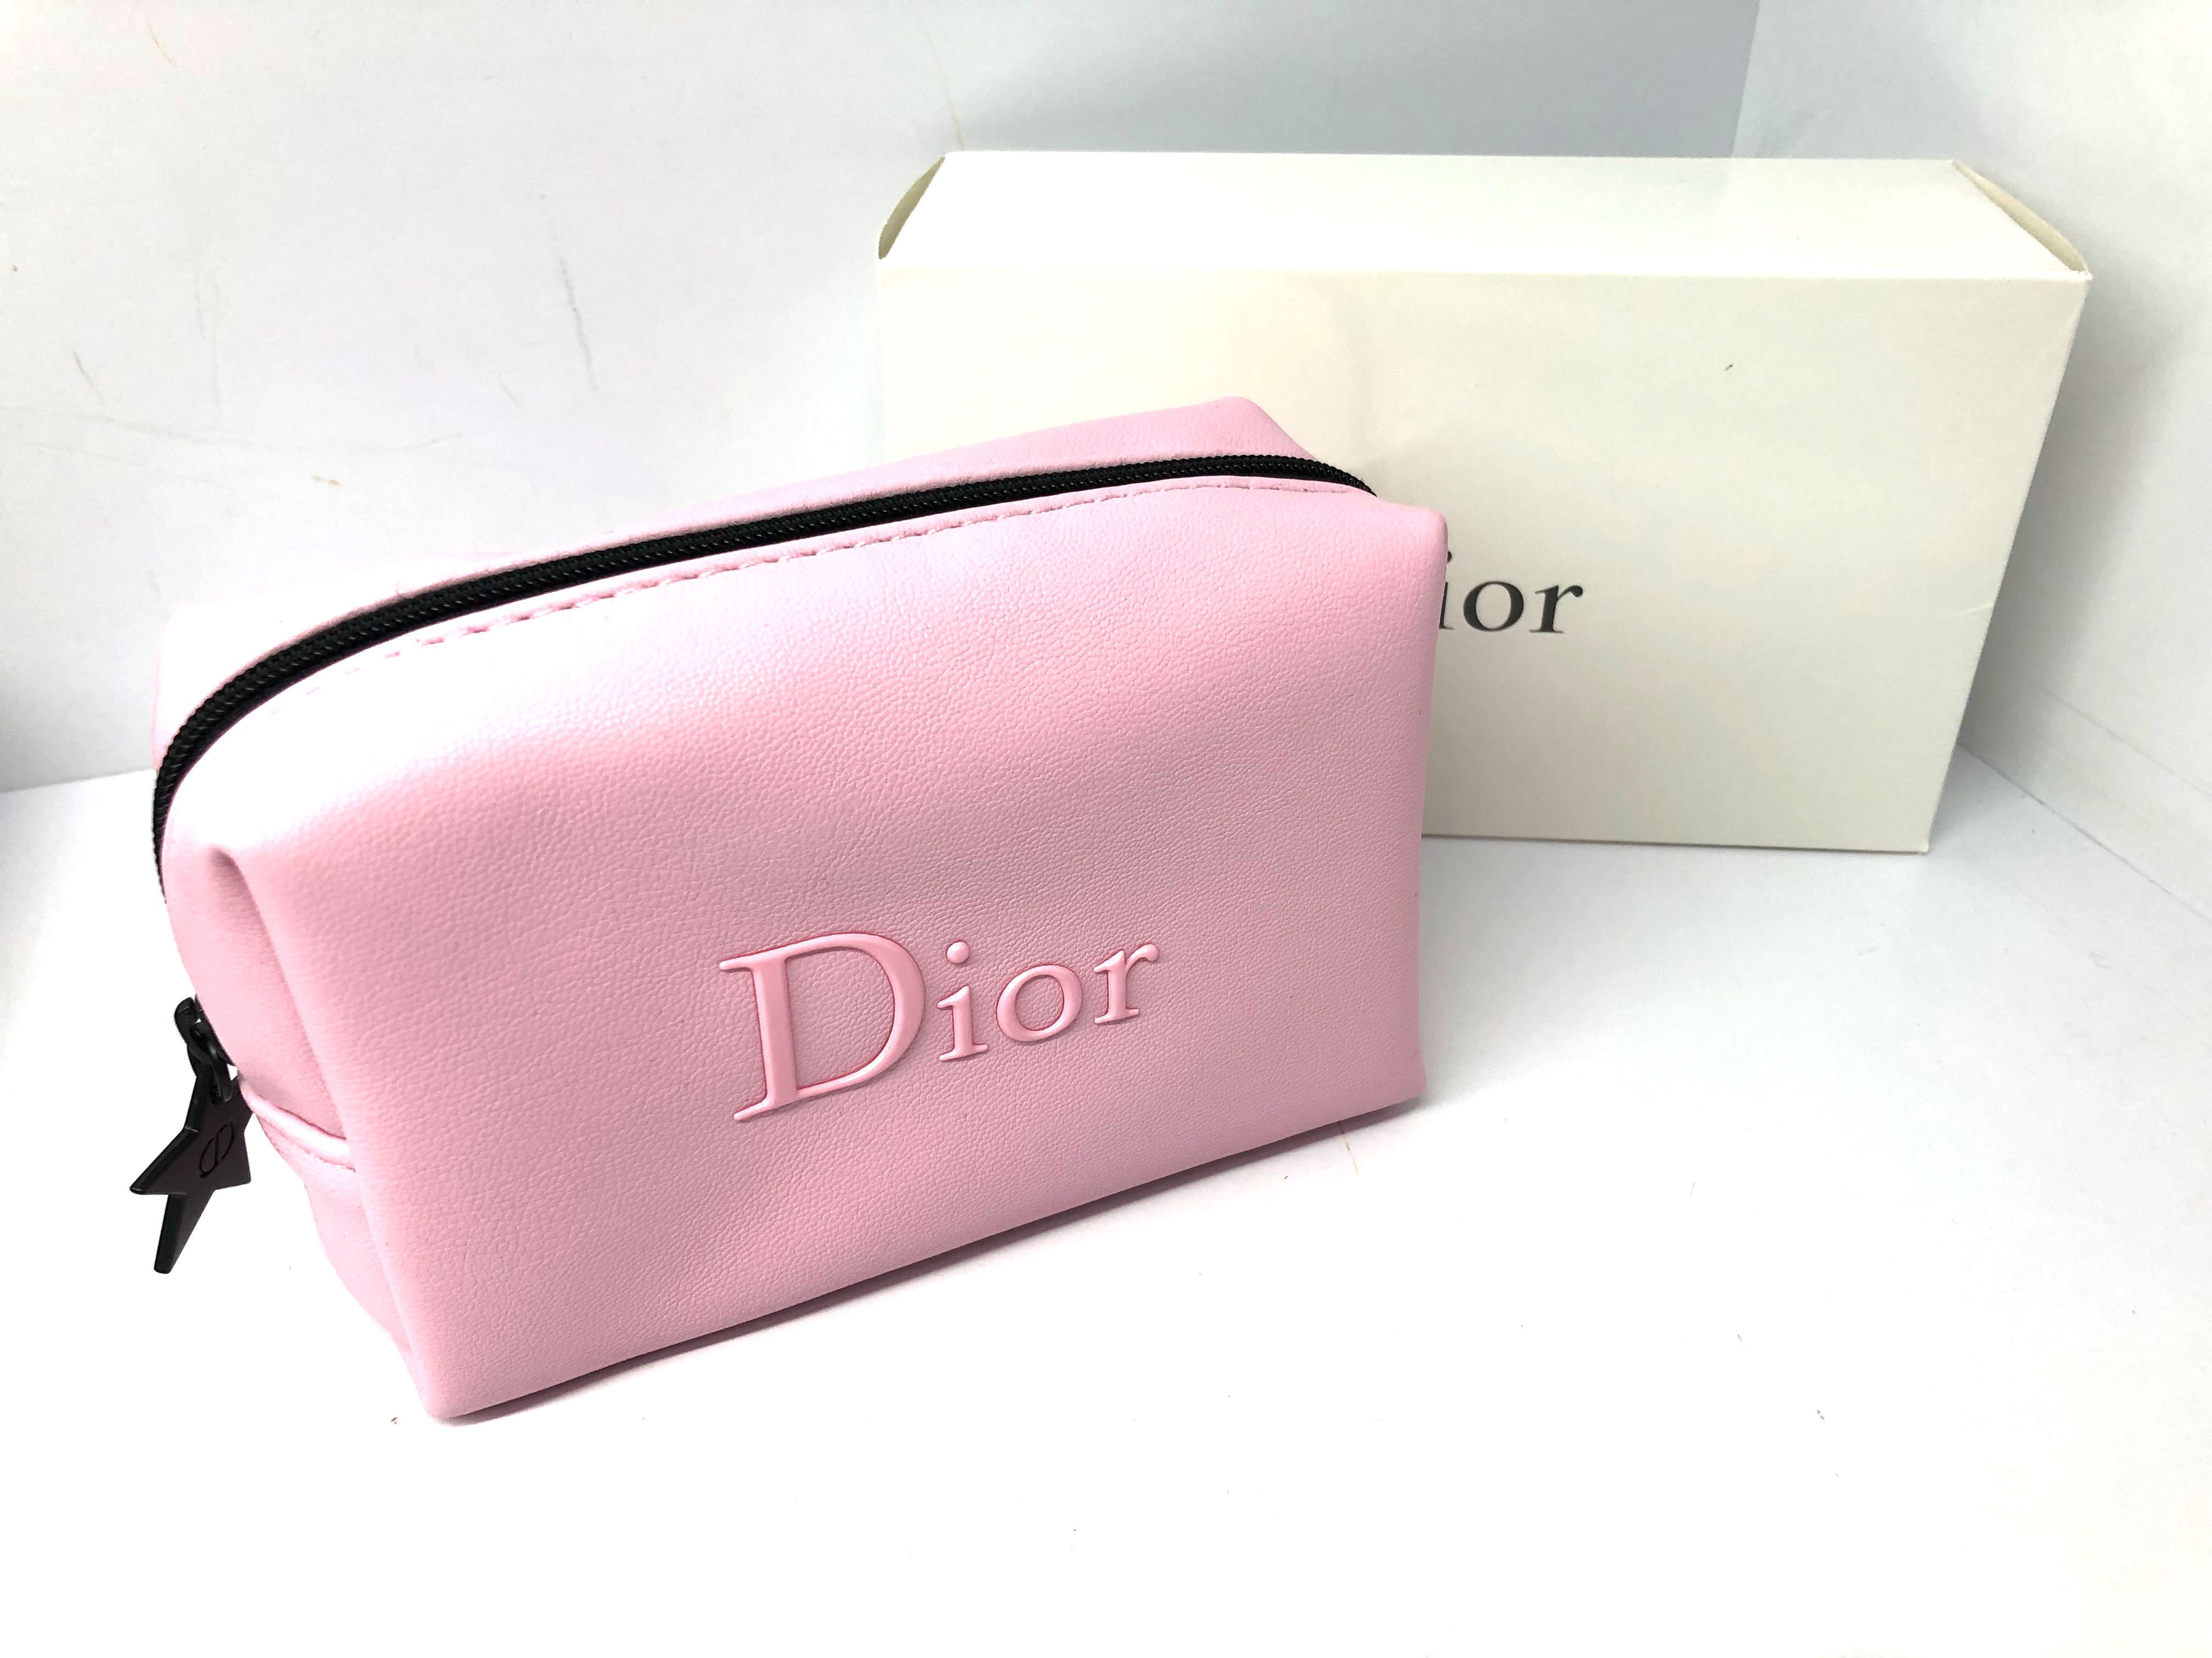 dior makeup pouch